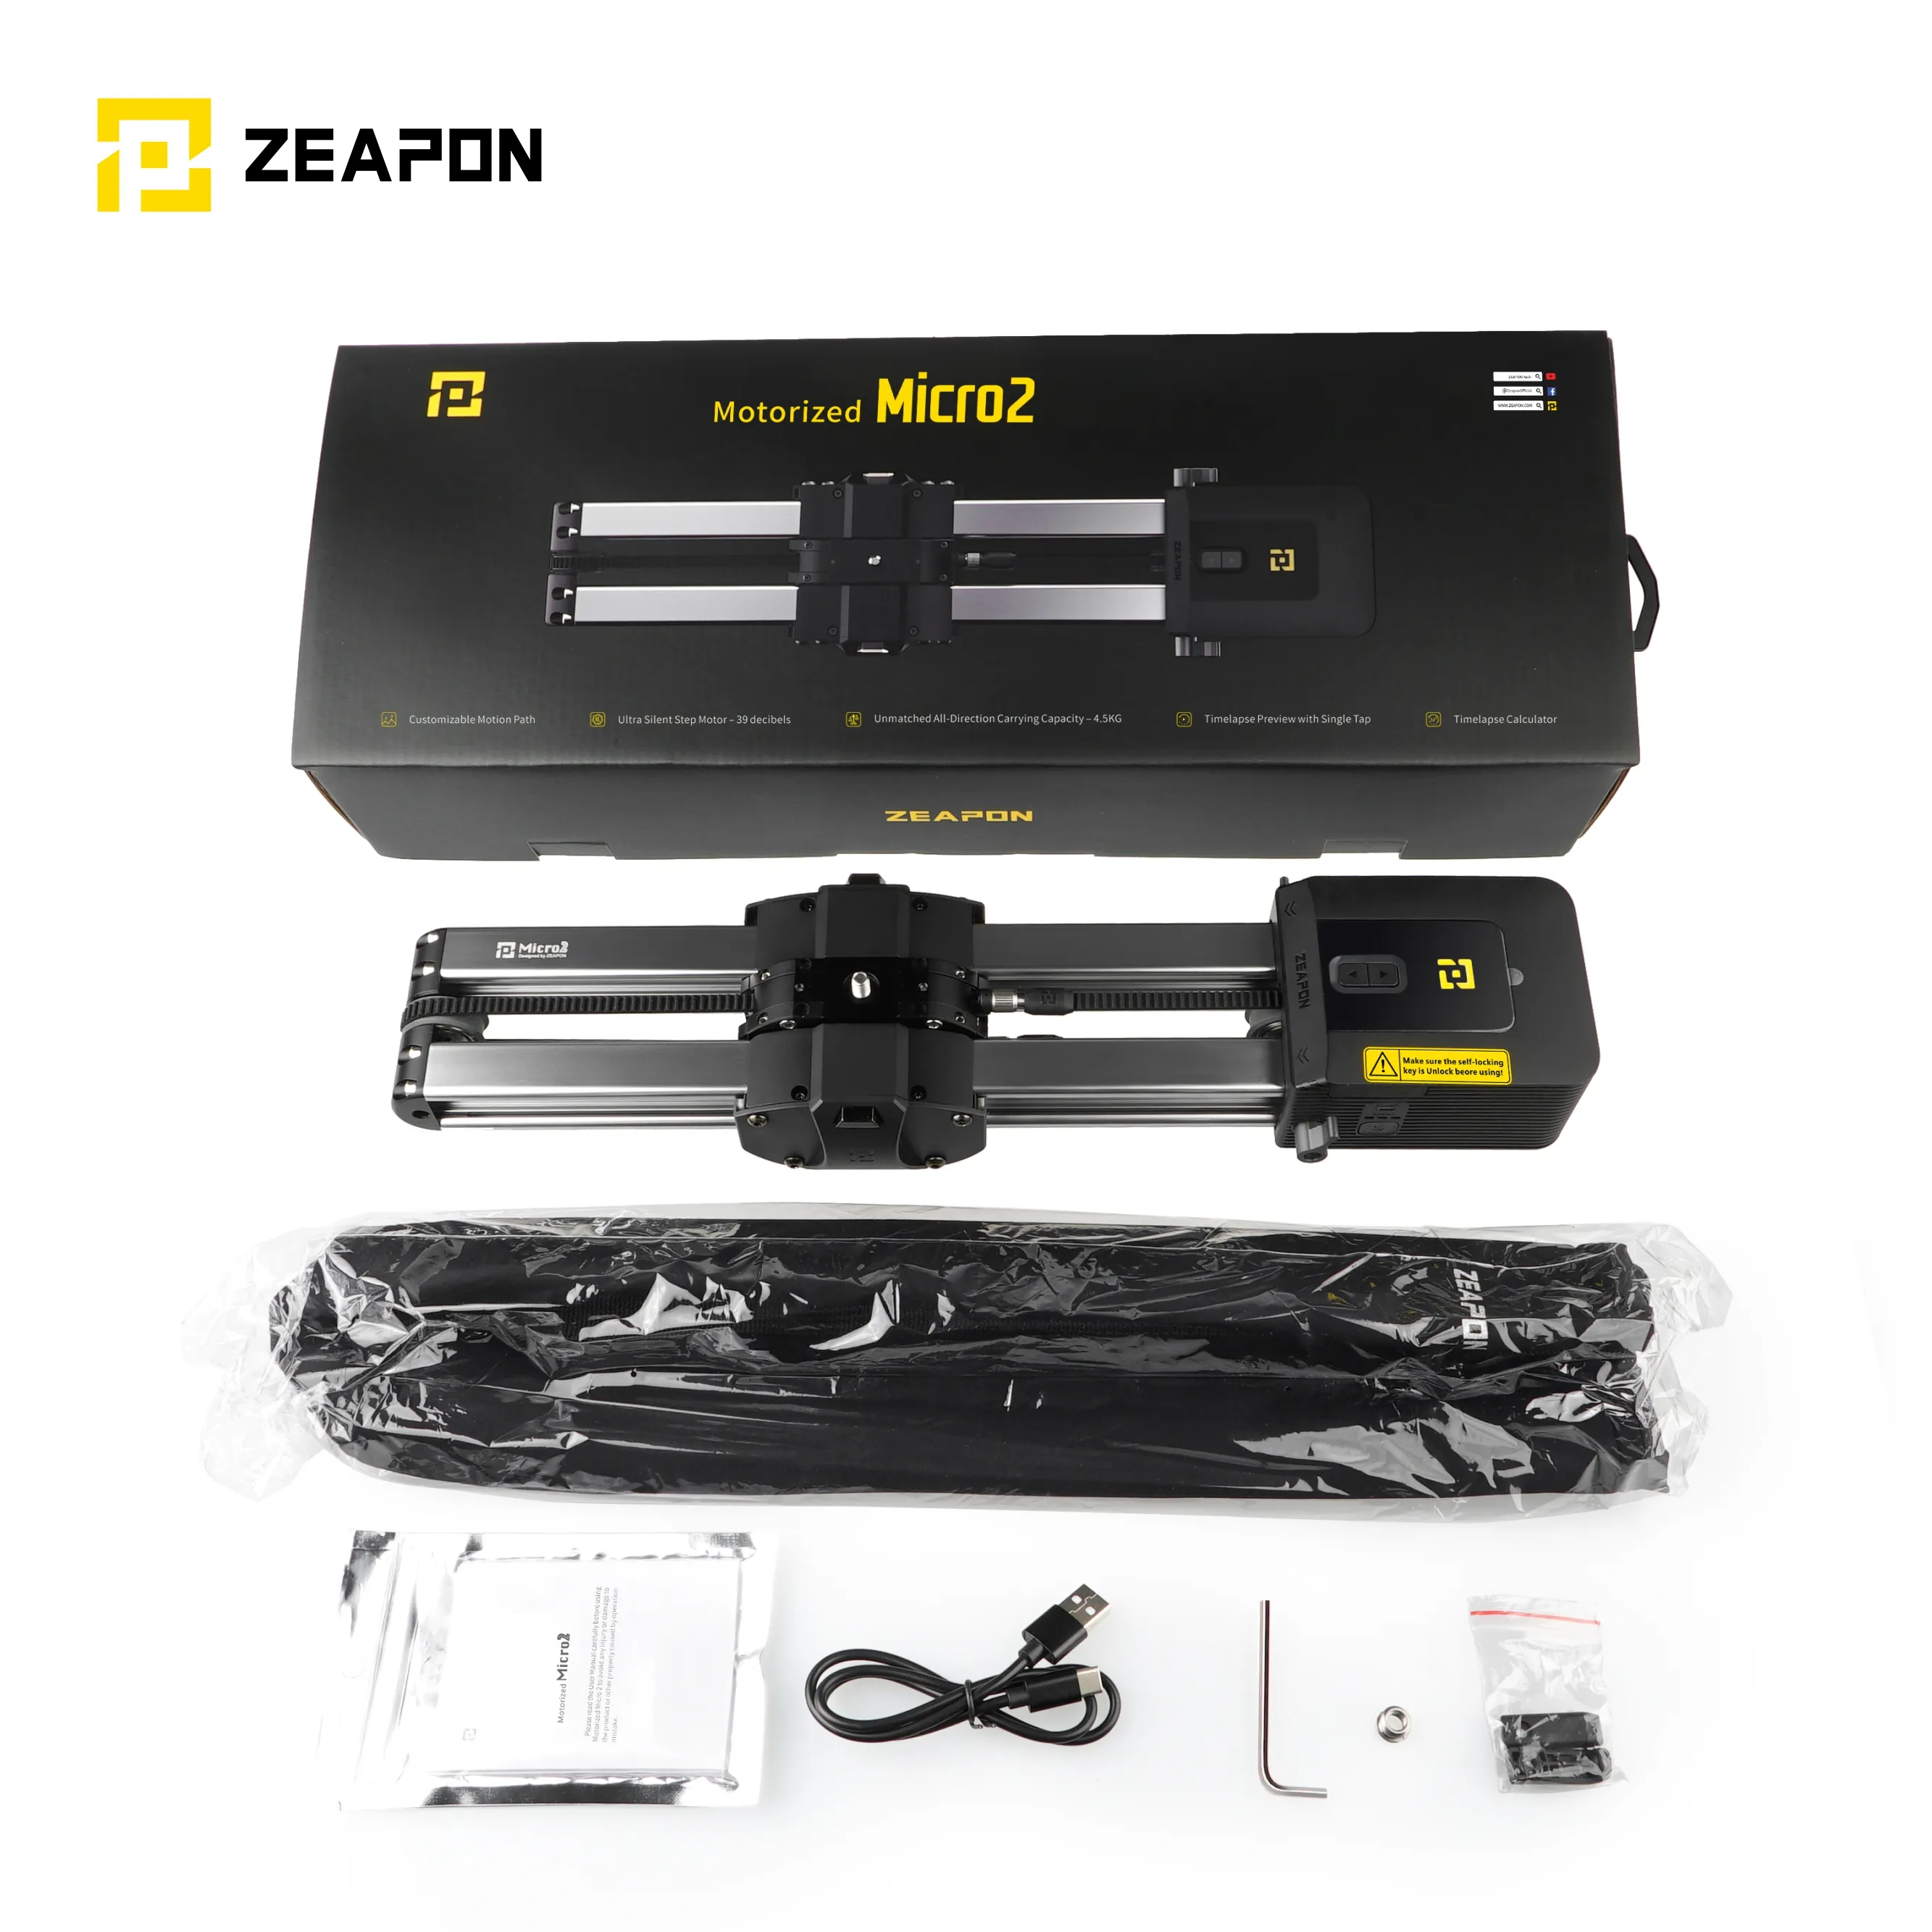 ZEAPON Micro 2 มินิแบบพกพาเงียบมอเตอร์กล้องวิดีโอระยะทางคู่ขนานเลื่อนมาโครTRACK